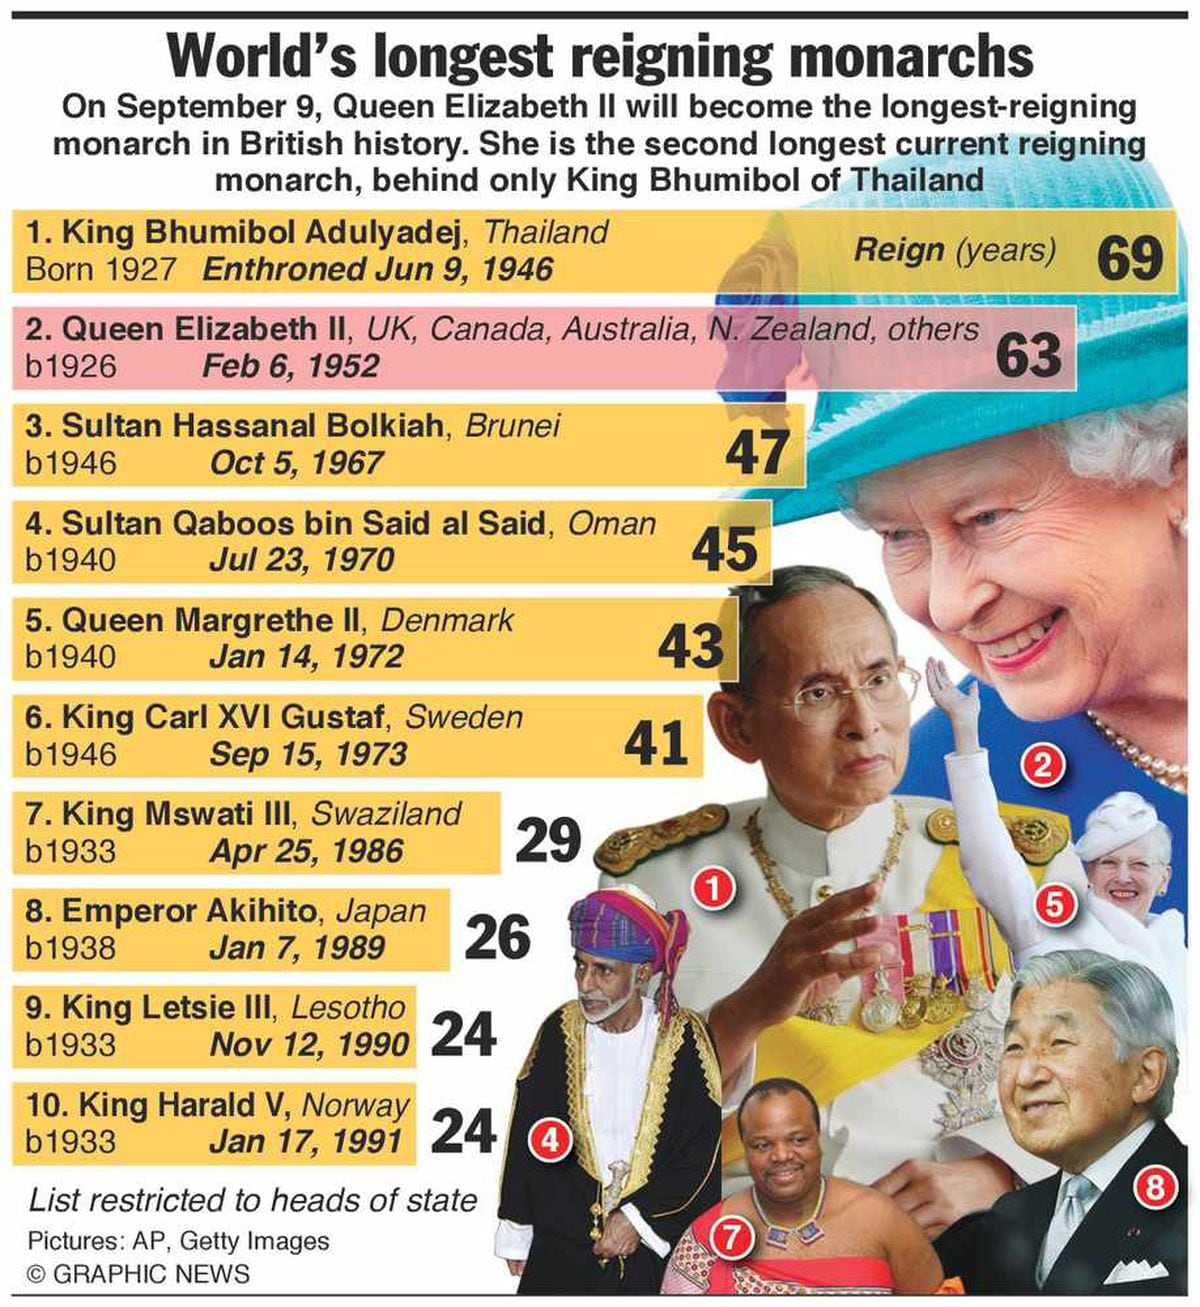 Queen Elizabeth II officially longest reigning British monarch